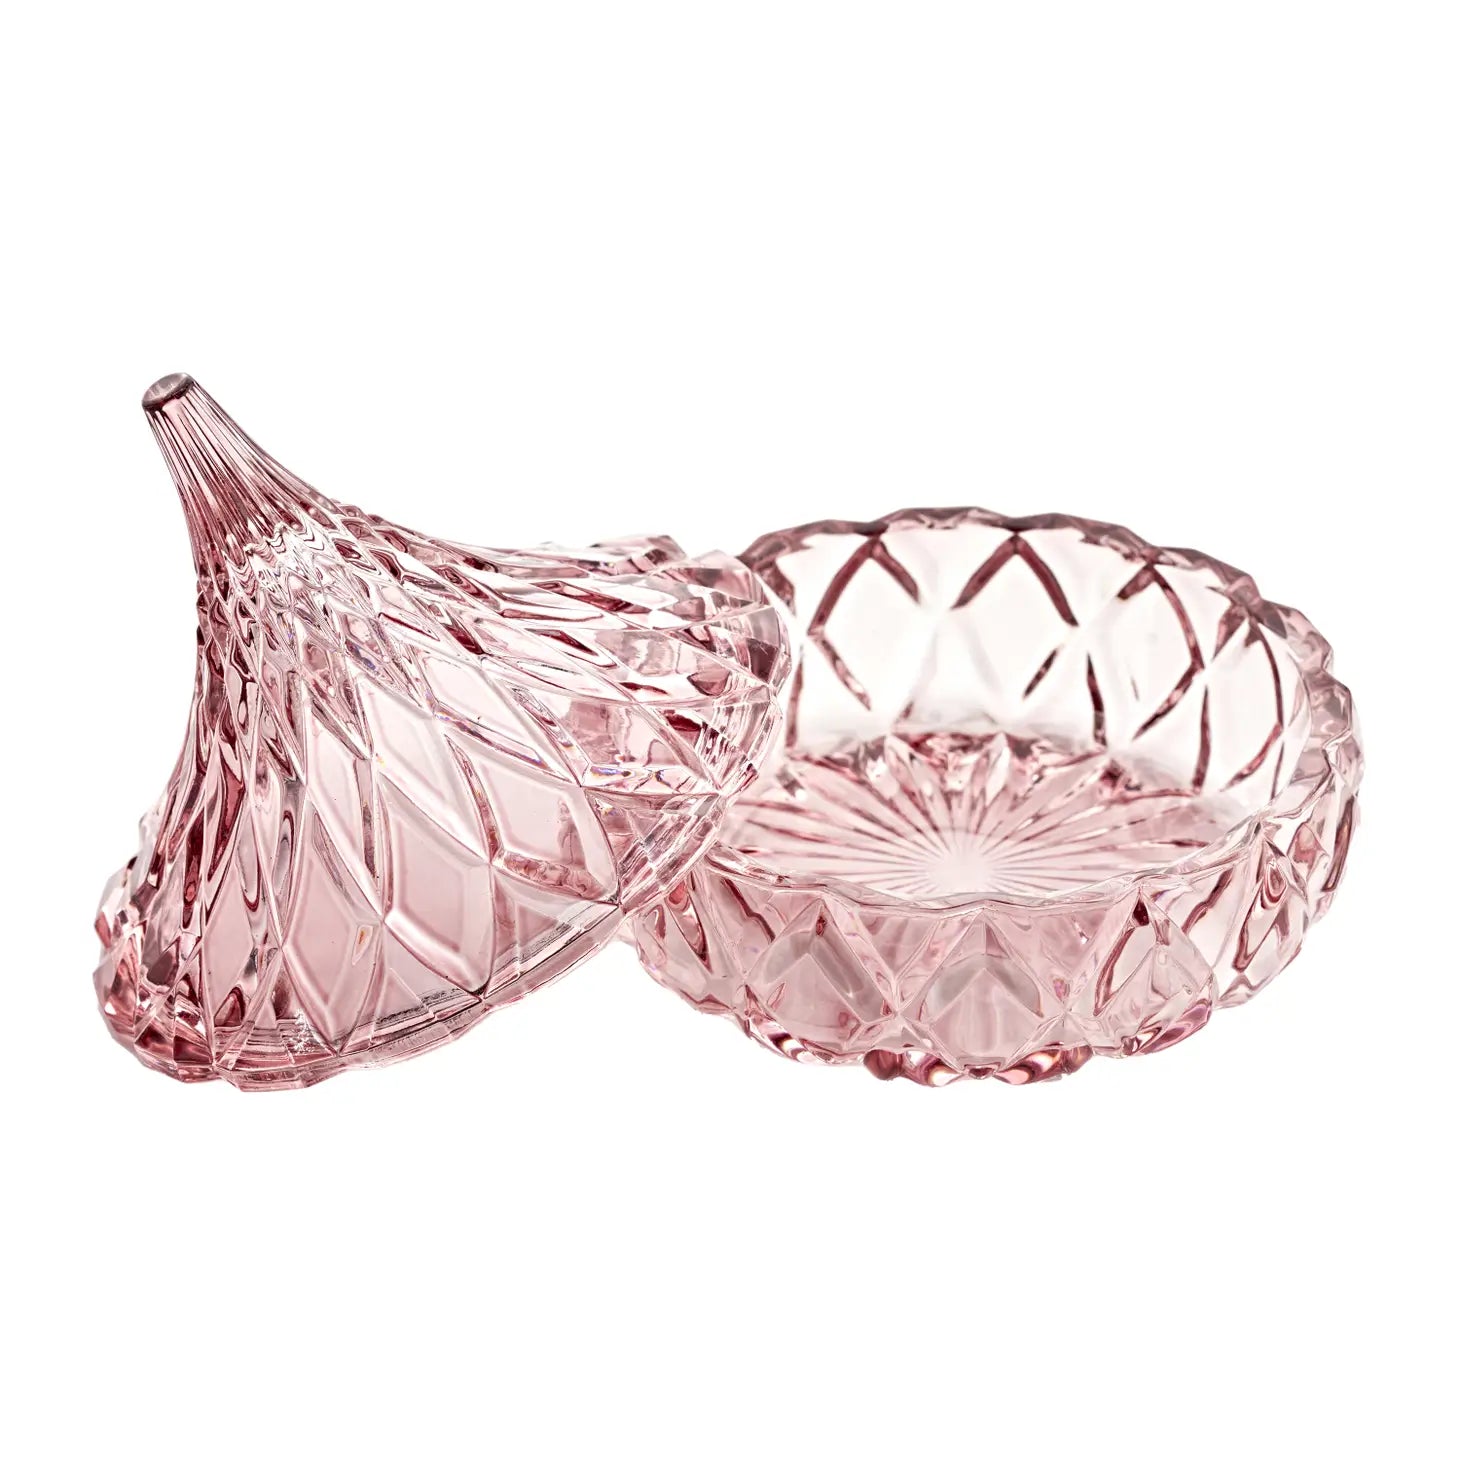 Crystal Hershey Kiss Candy Dish